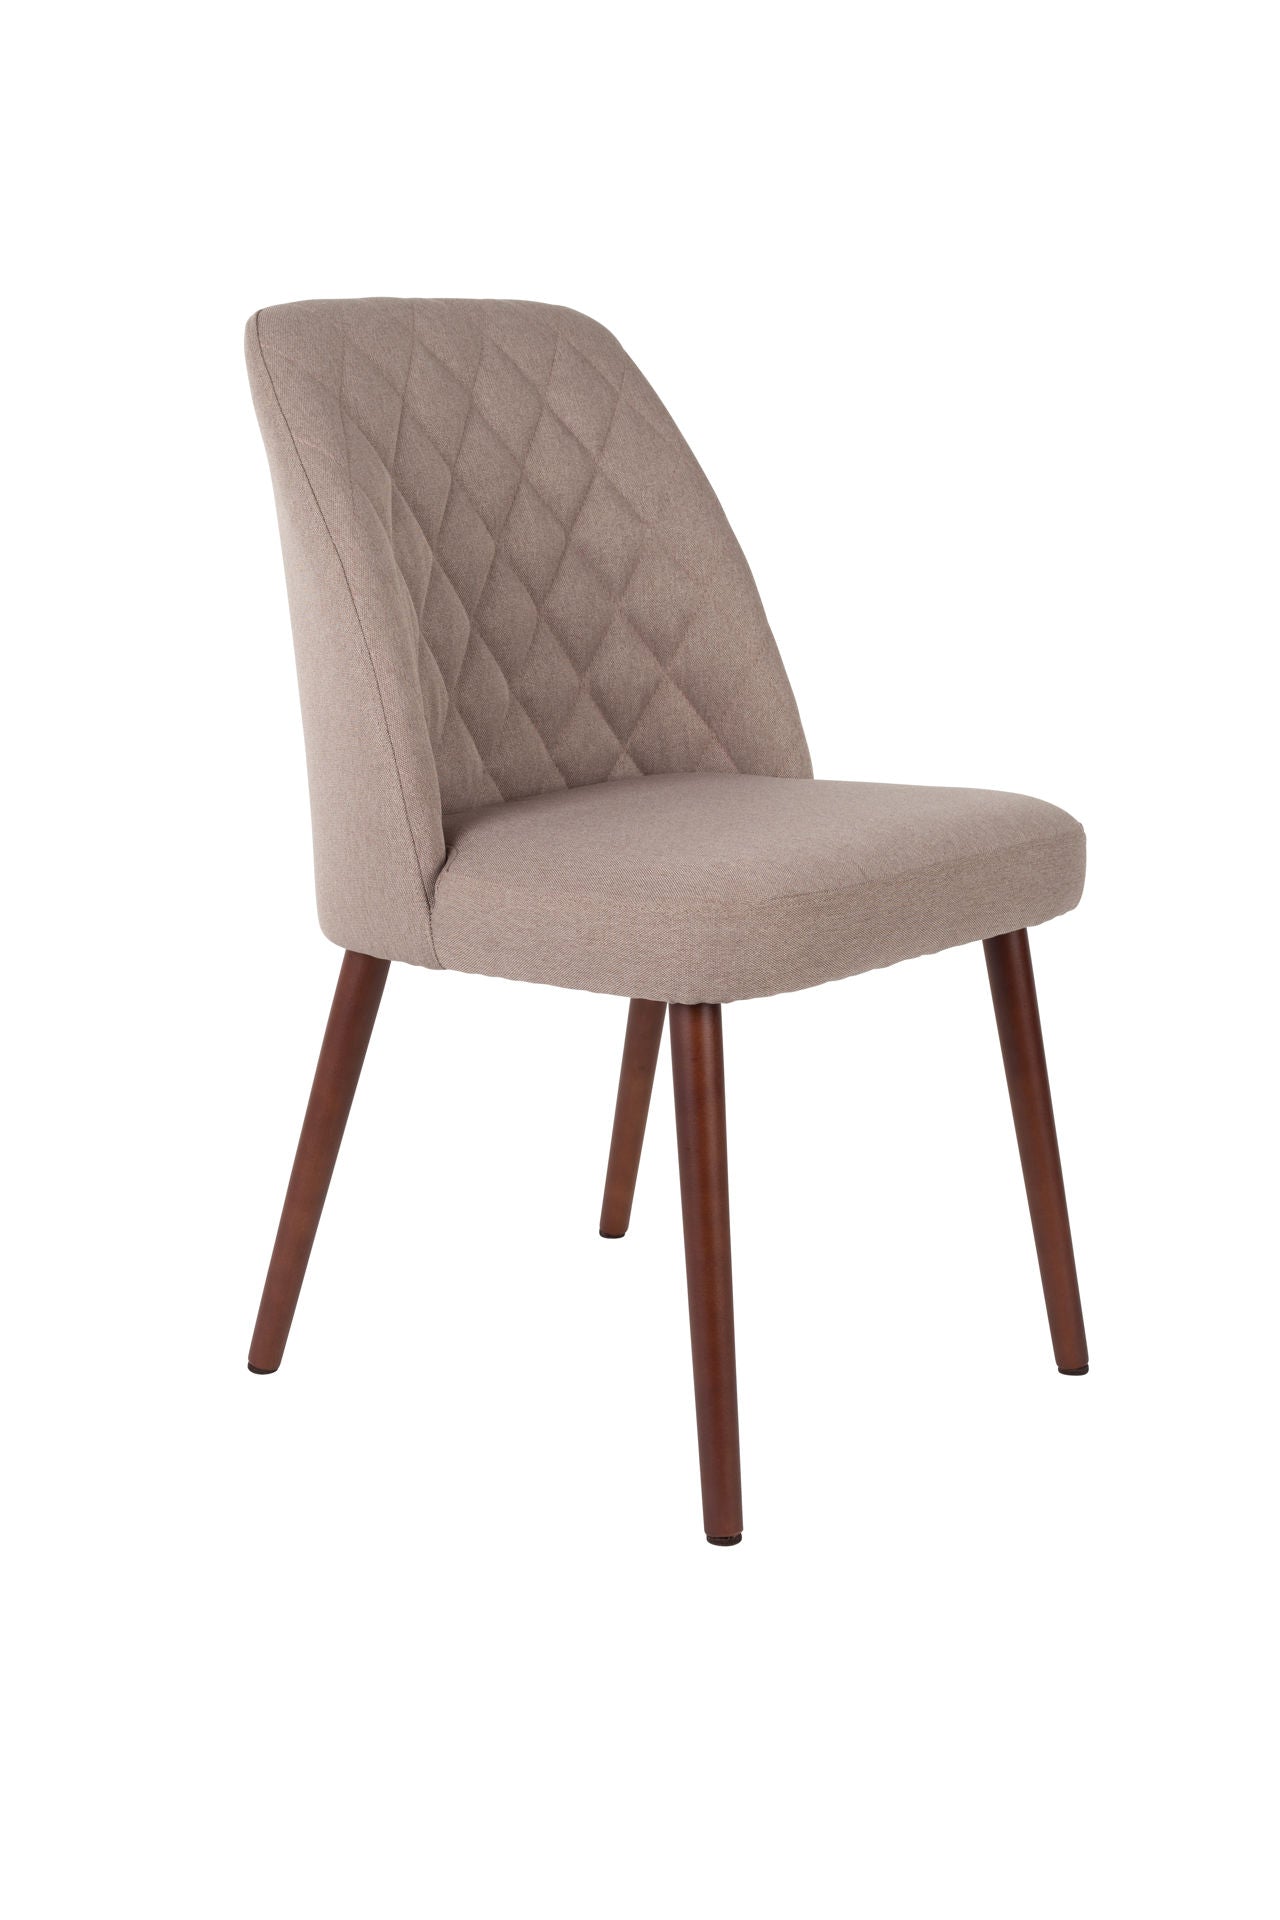 Nancy's Canonsburg Chair - Retro - Beige, Brown - Polyester, Pu-Foam, Plywood - 56 cm x 48 cm x 85 cm